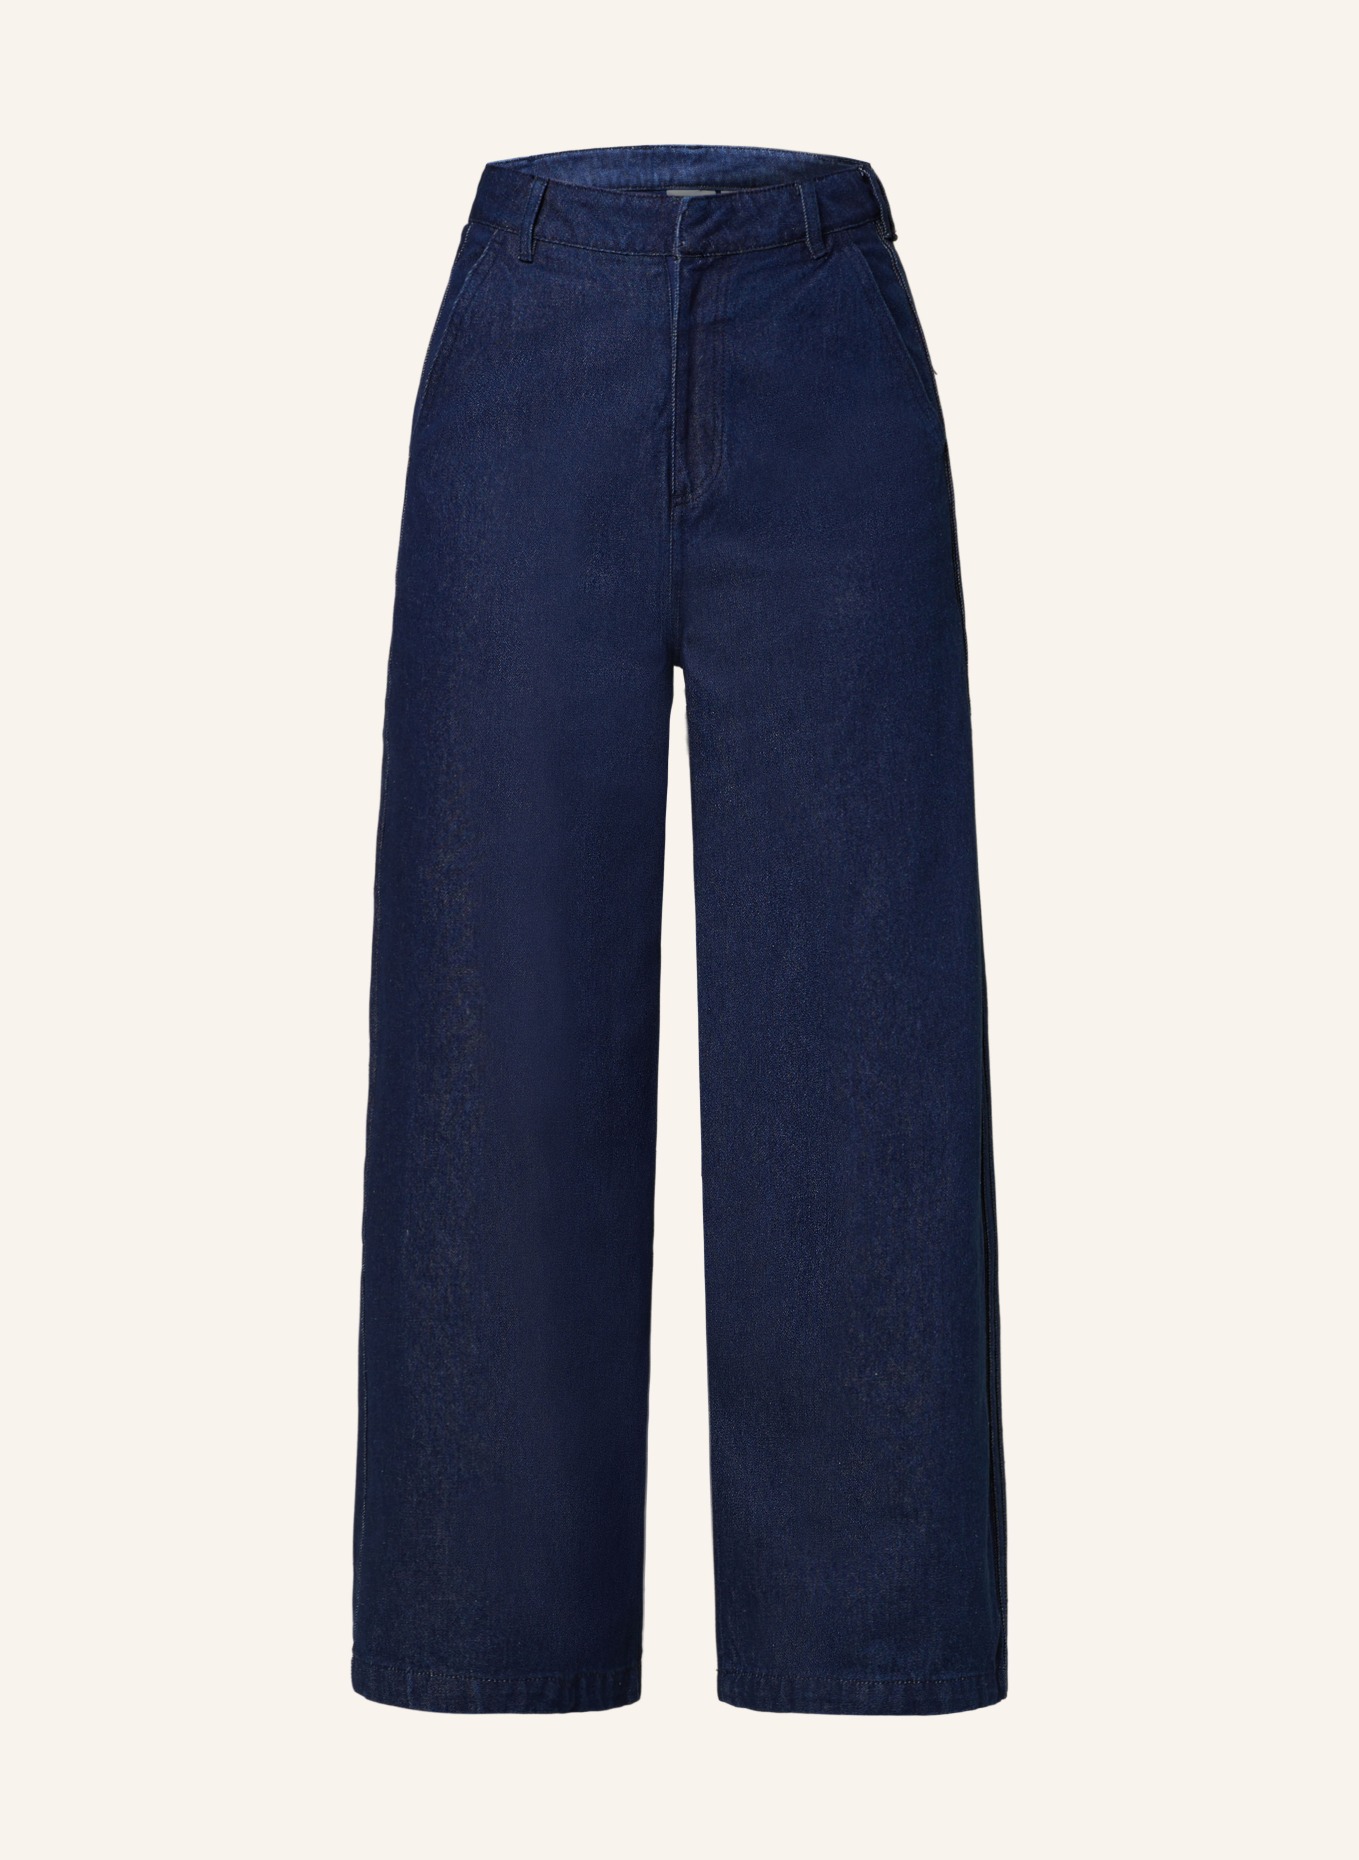 adidas Originals Jeans 3-STRIPES, Farbe: INDDNM (Bild 1)